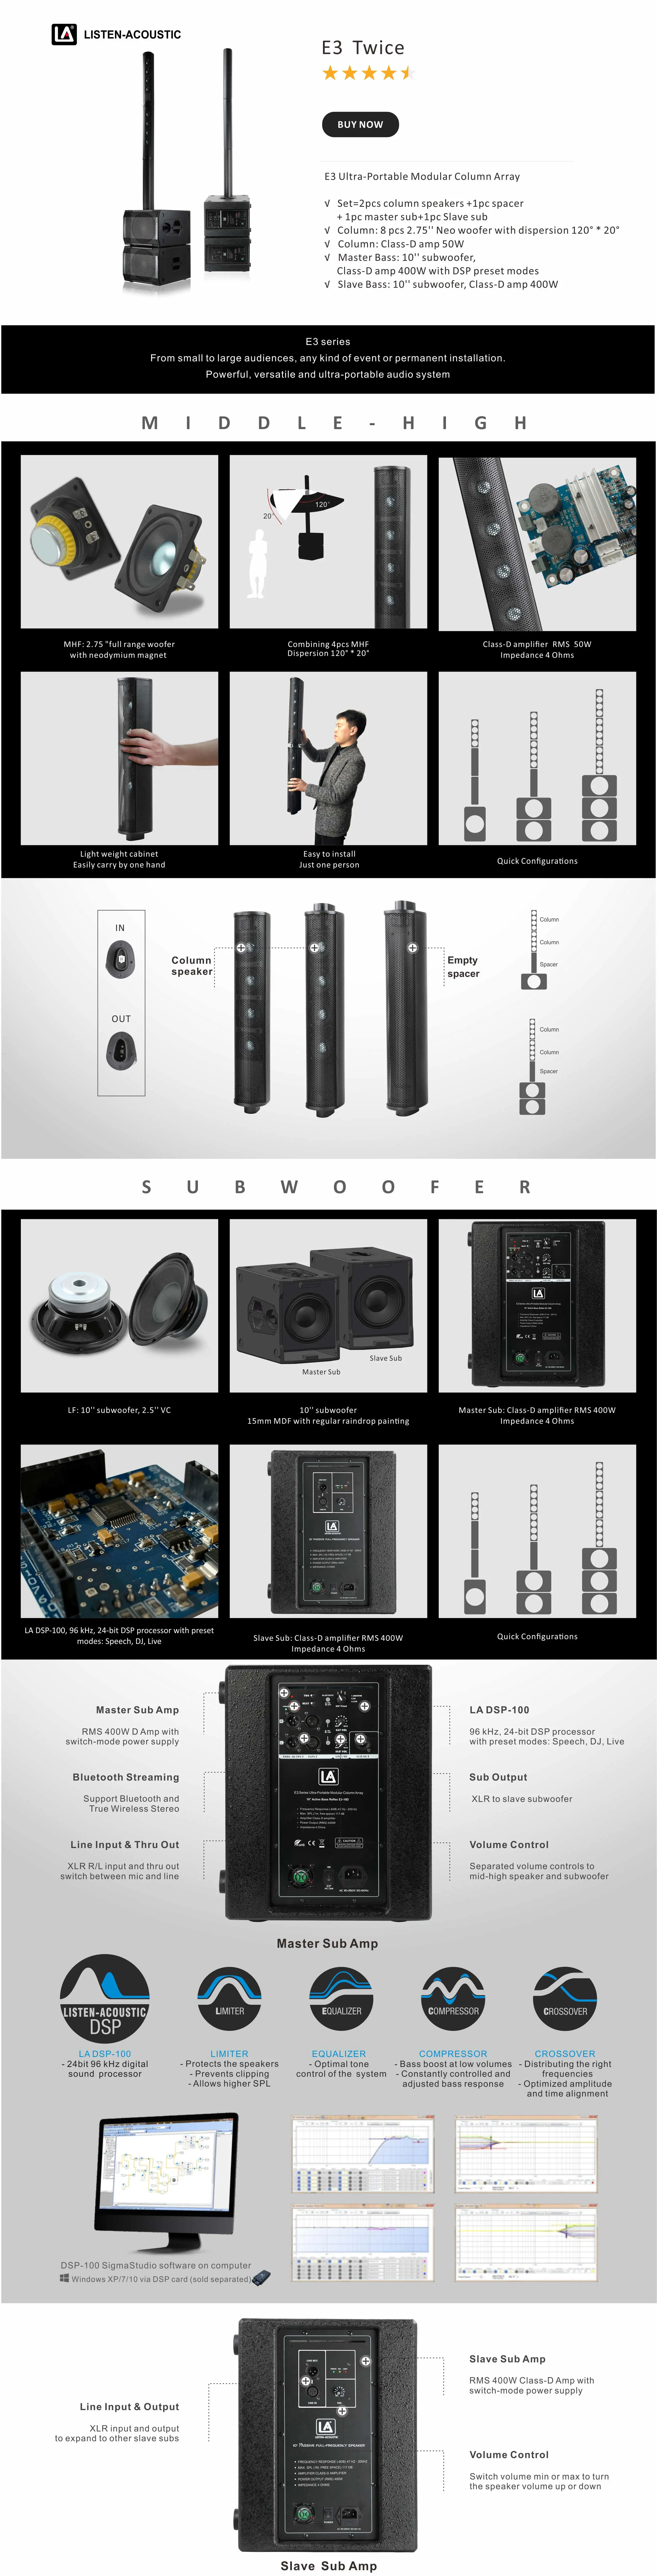 Column Array System, Portable Speakers, Line Array System, e3 twice dj speakers, powered speakers